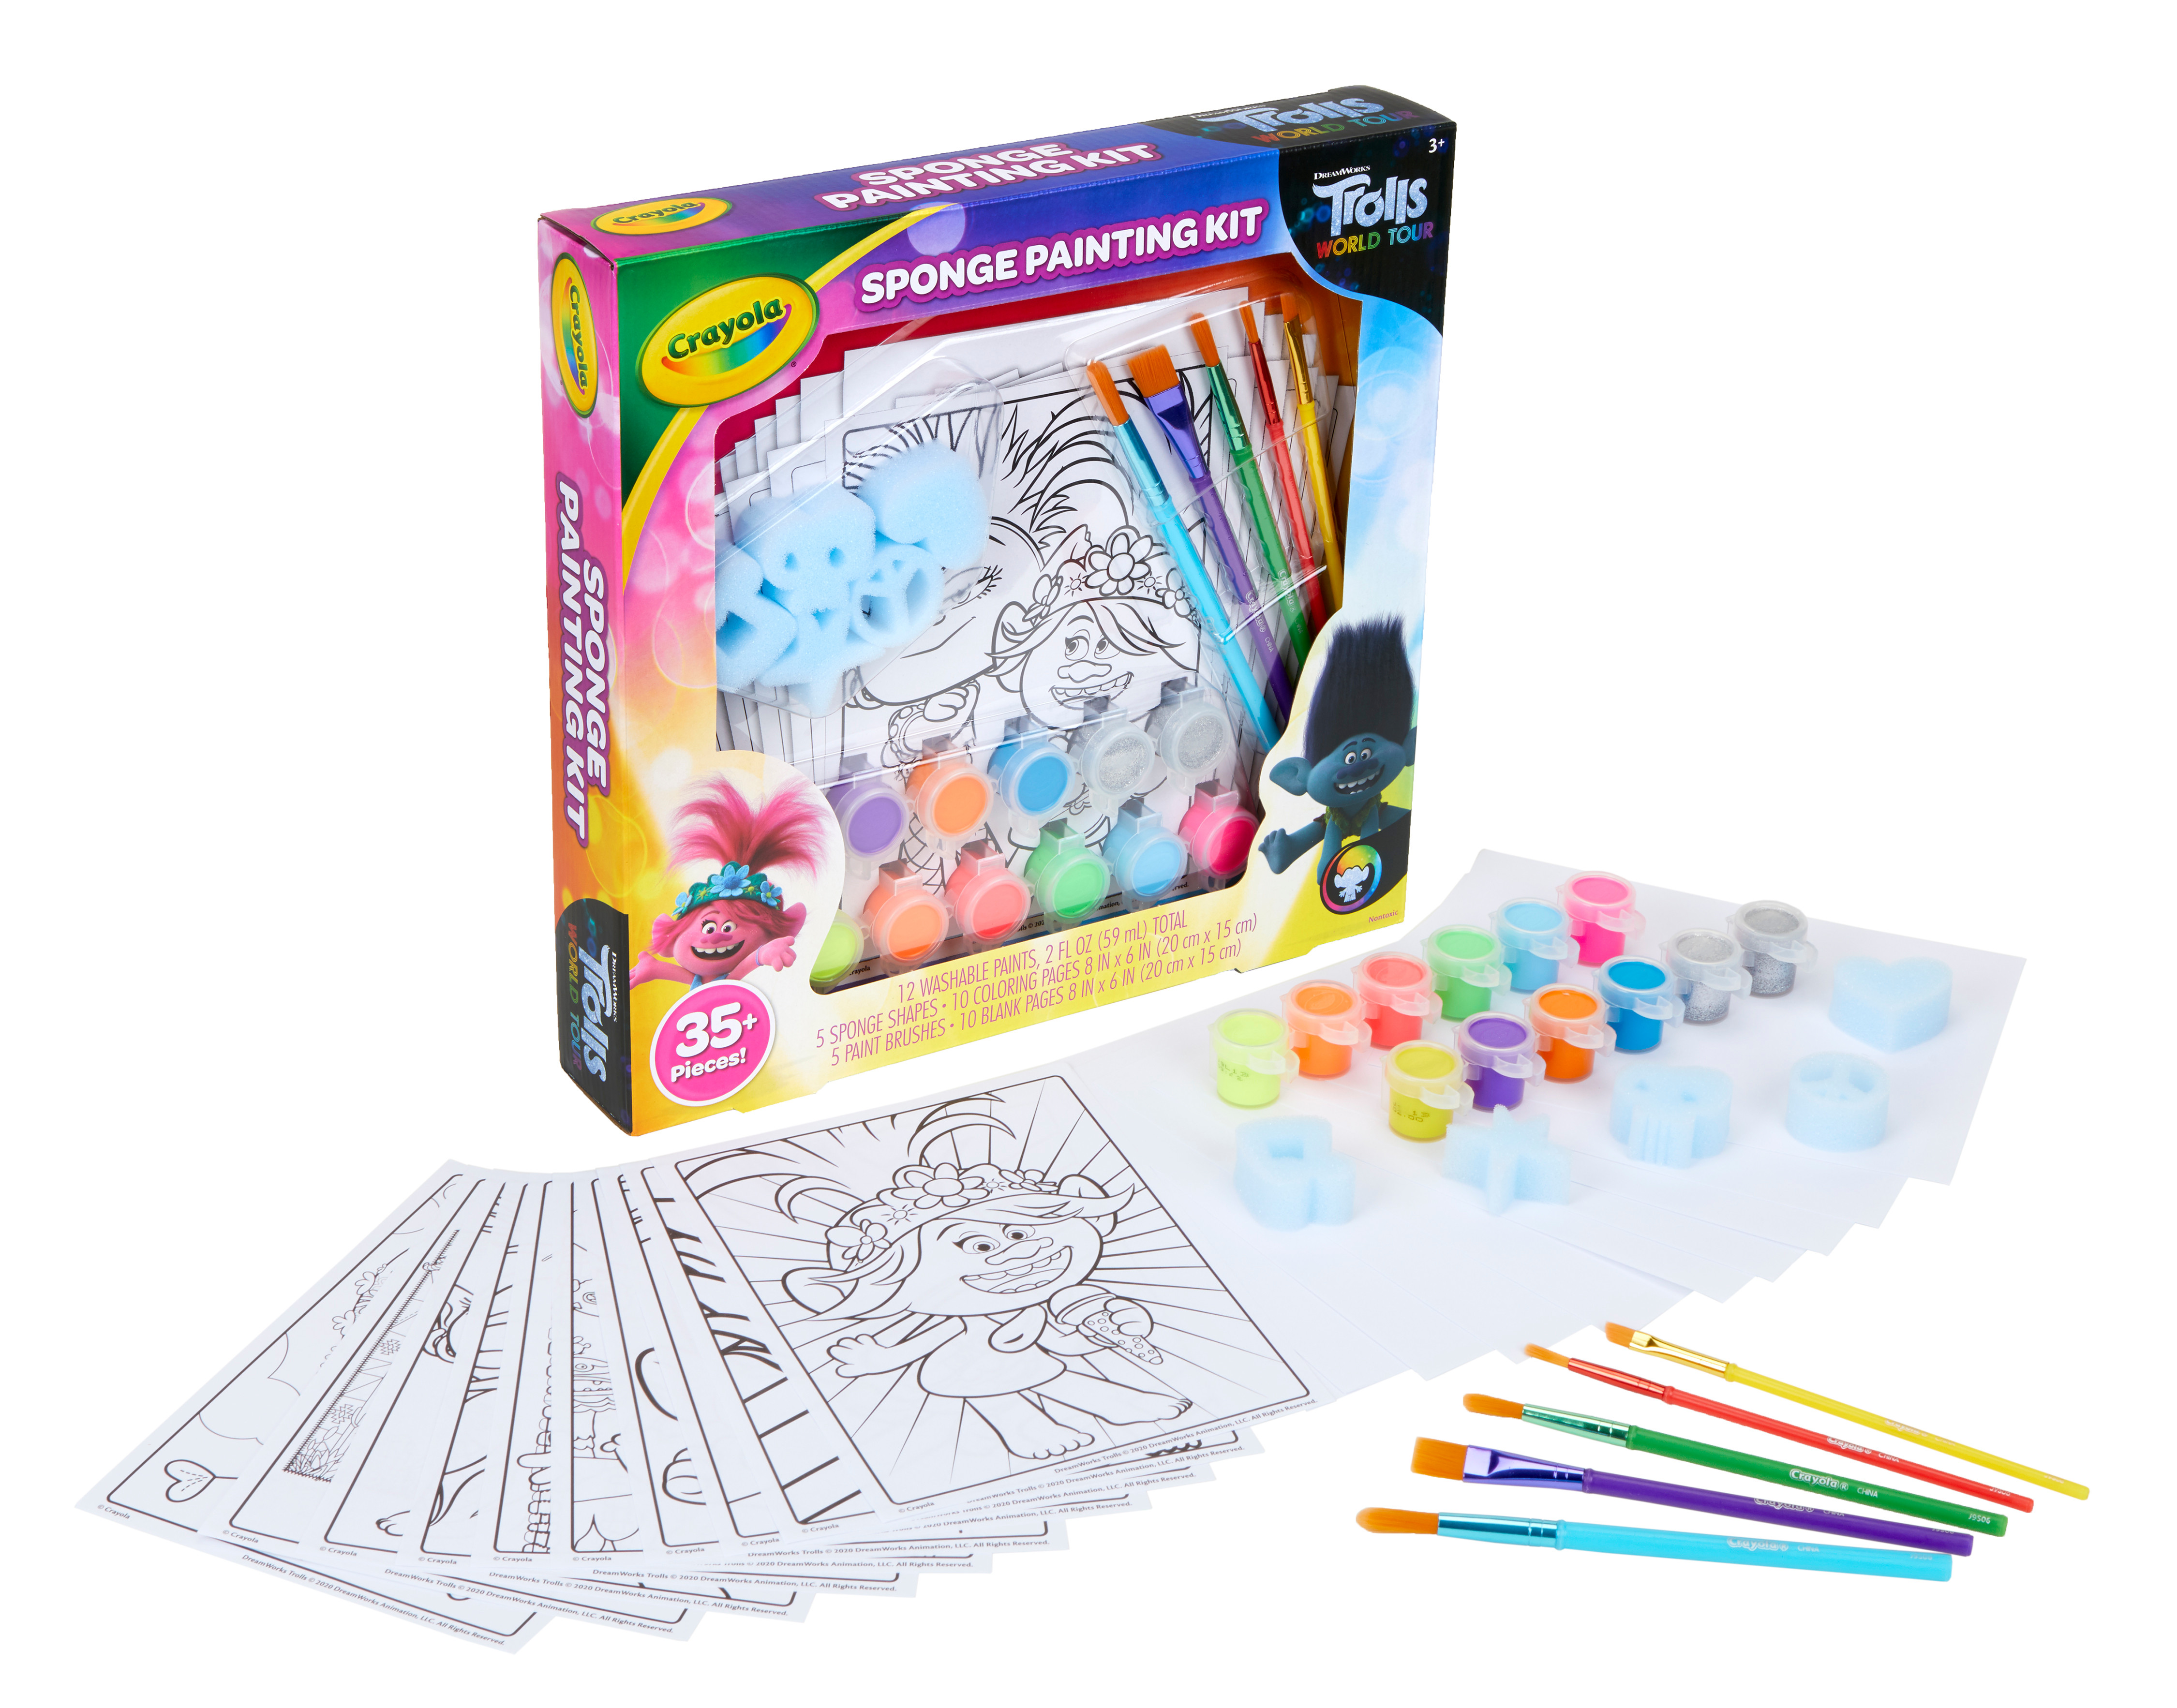 Crayola Trolls 2 Paint Set, Sponge Painting Set, Gift for Kids - Walmart.com $10.50